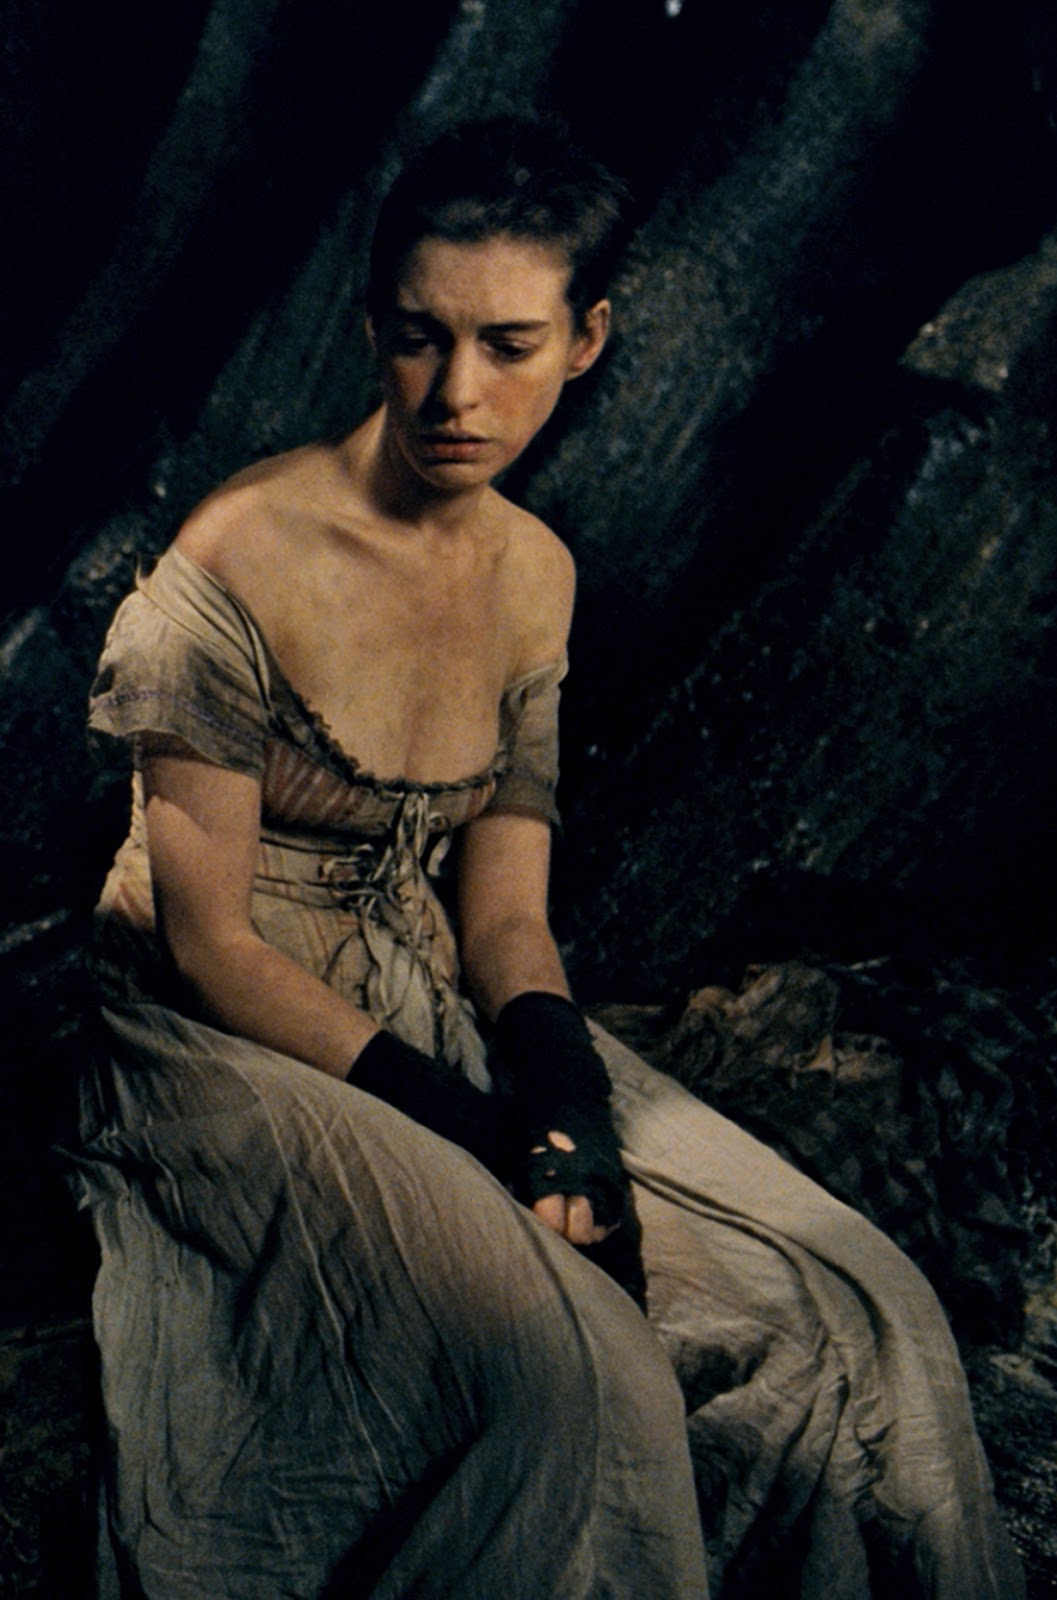 Anne Hathaway in Les Misérables